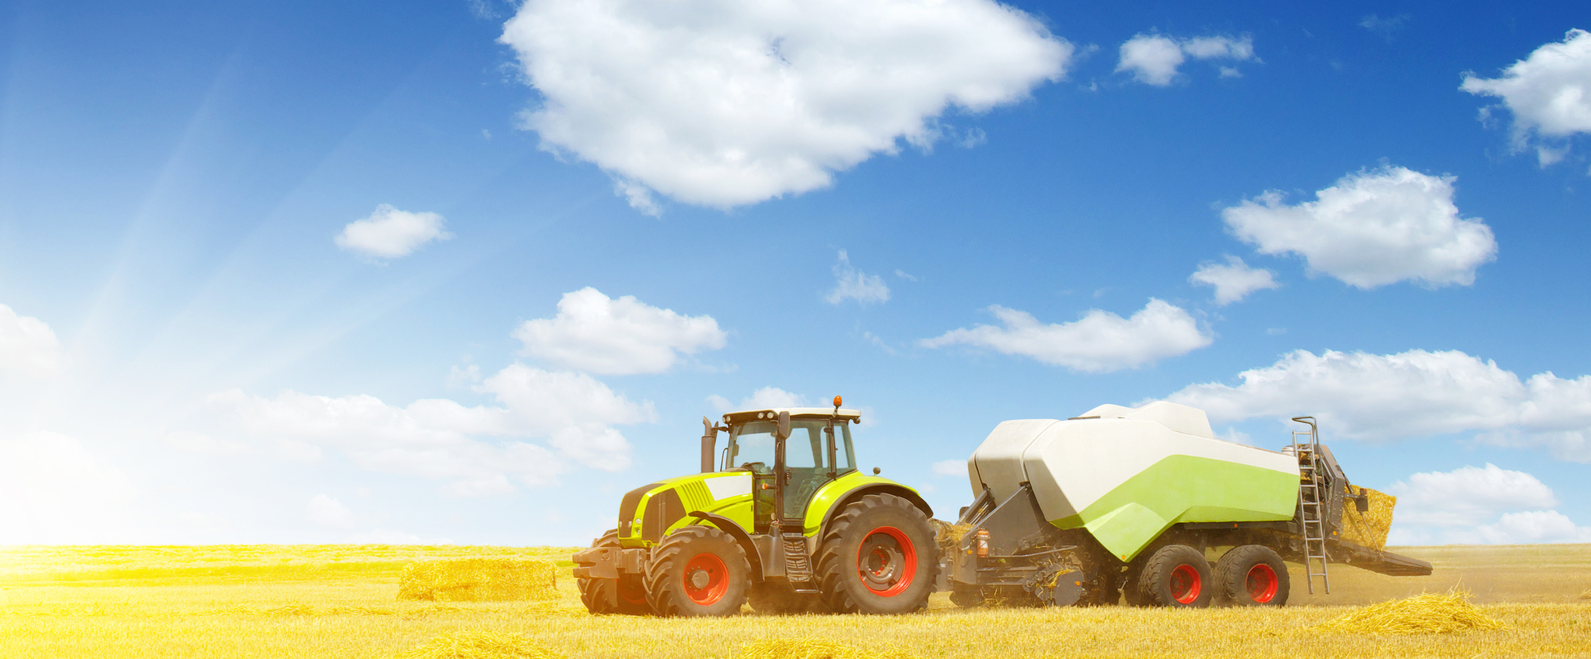 Grupa Azoty Group is again partner of webinar for farmers